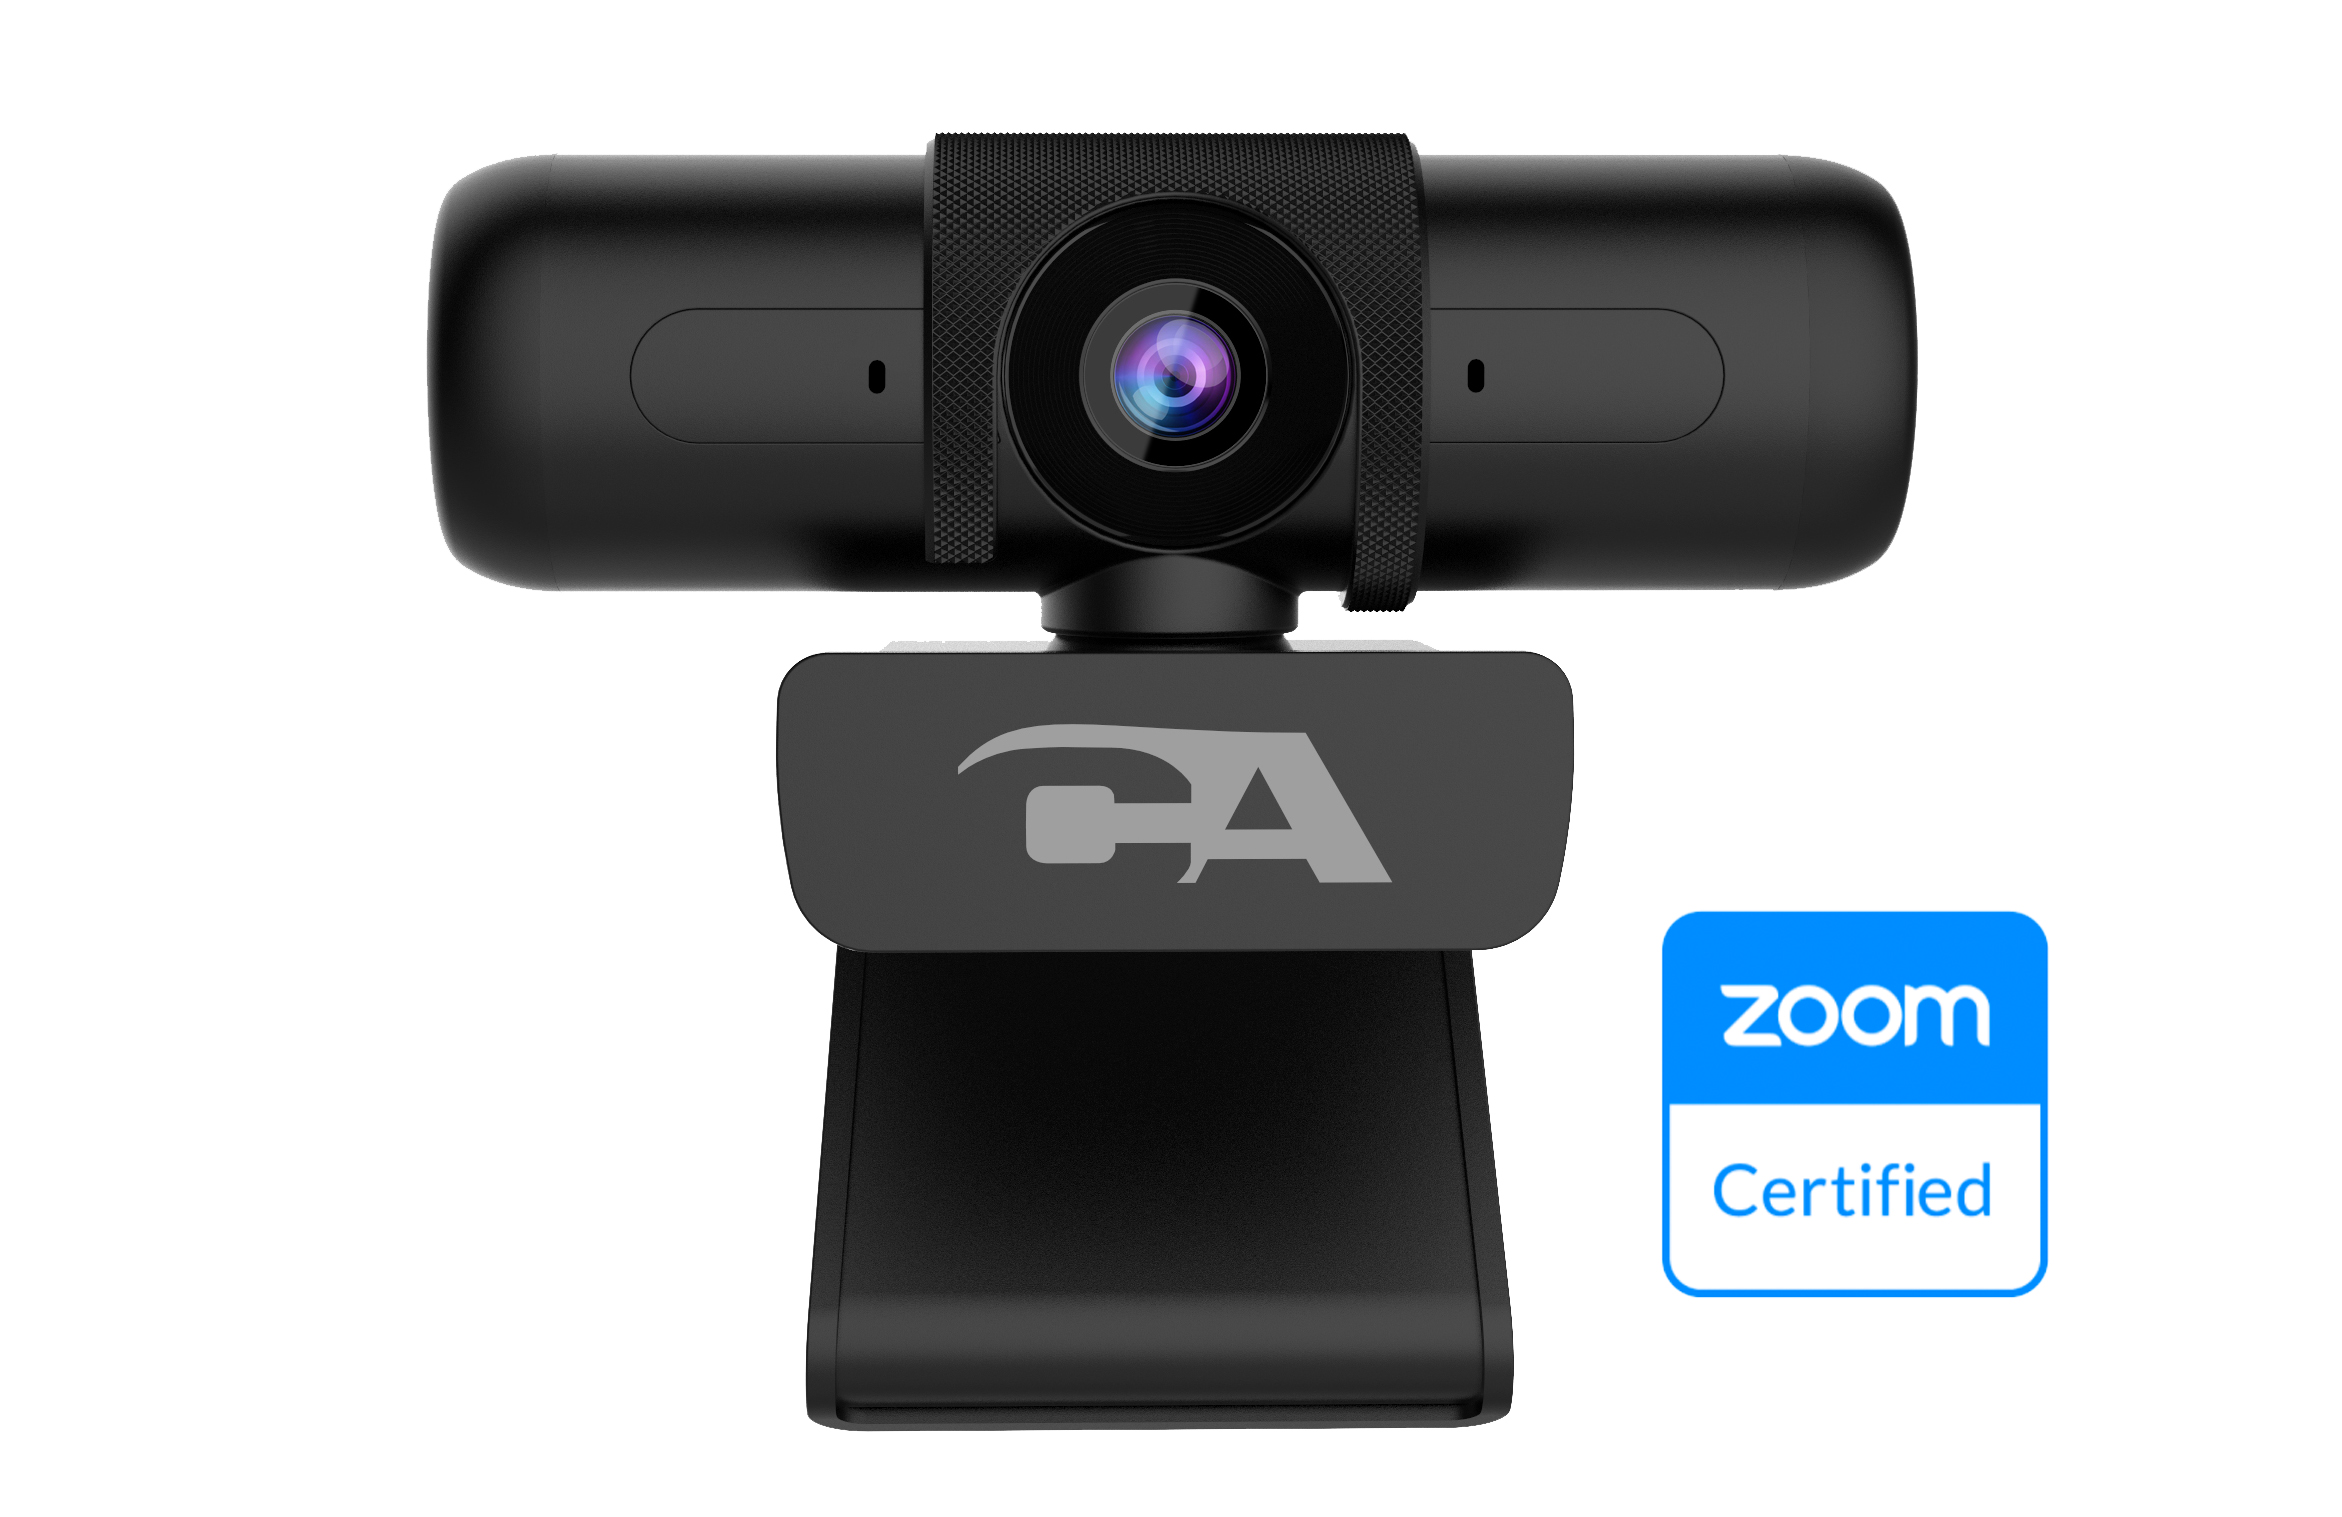 CA-Essential-Webcam-1080HD 5MP WC-3000 — Cyber Acoustics